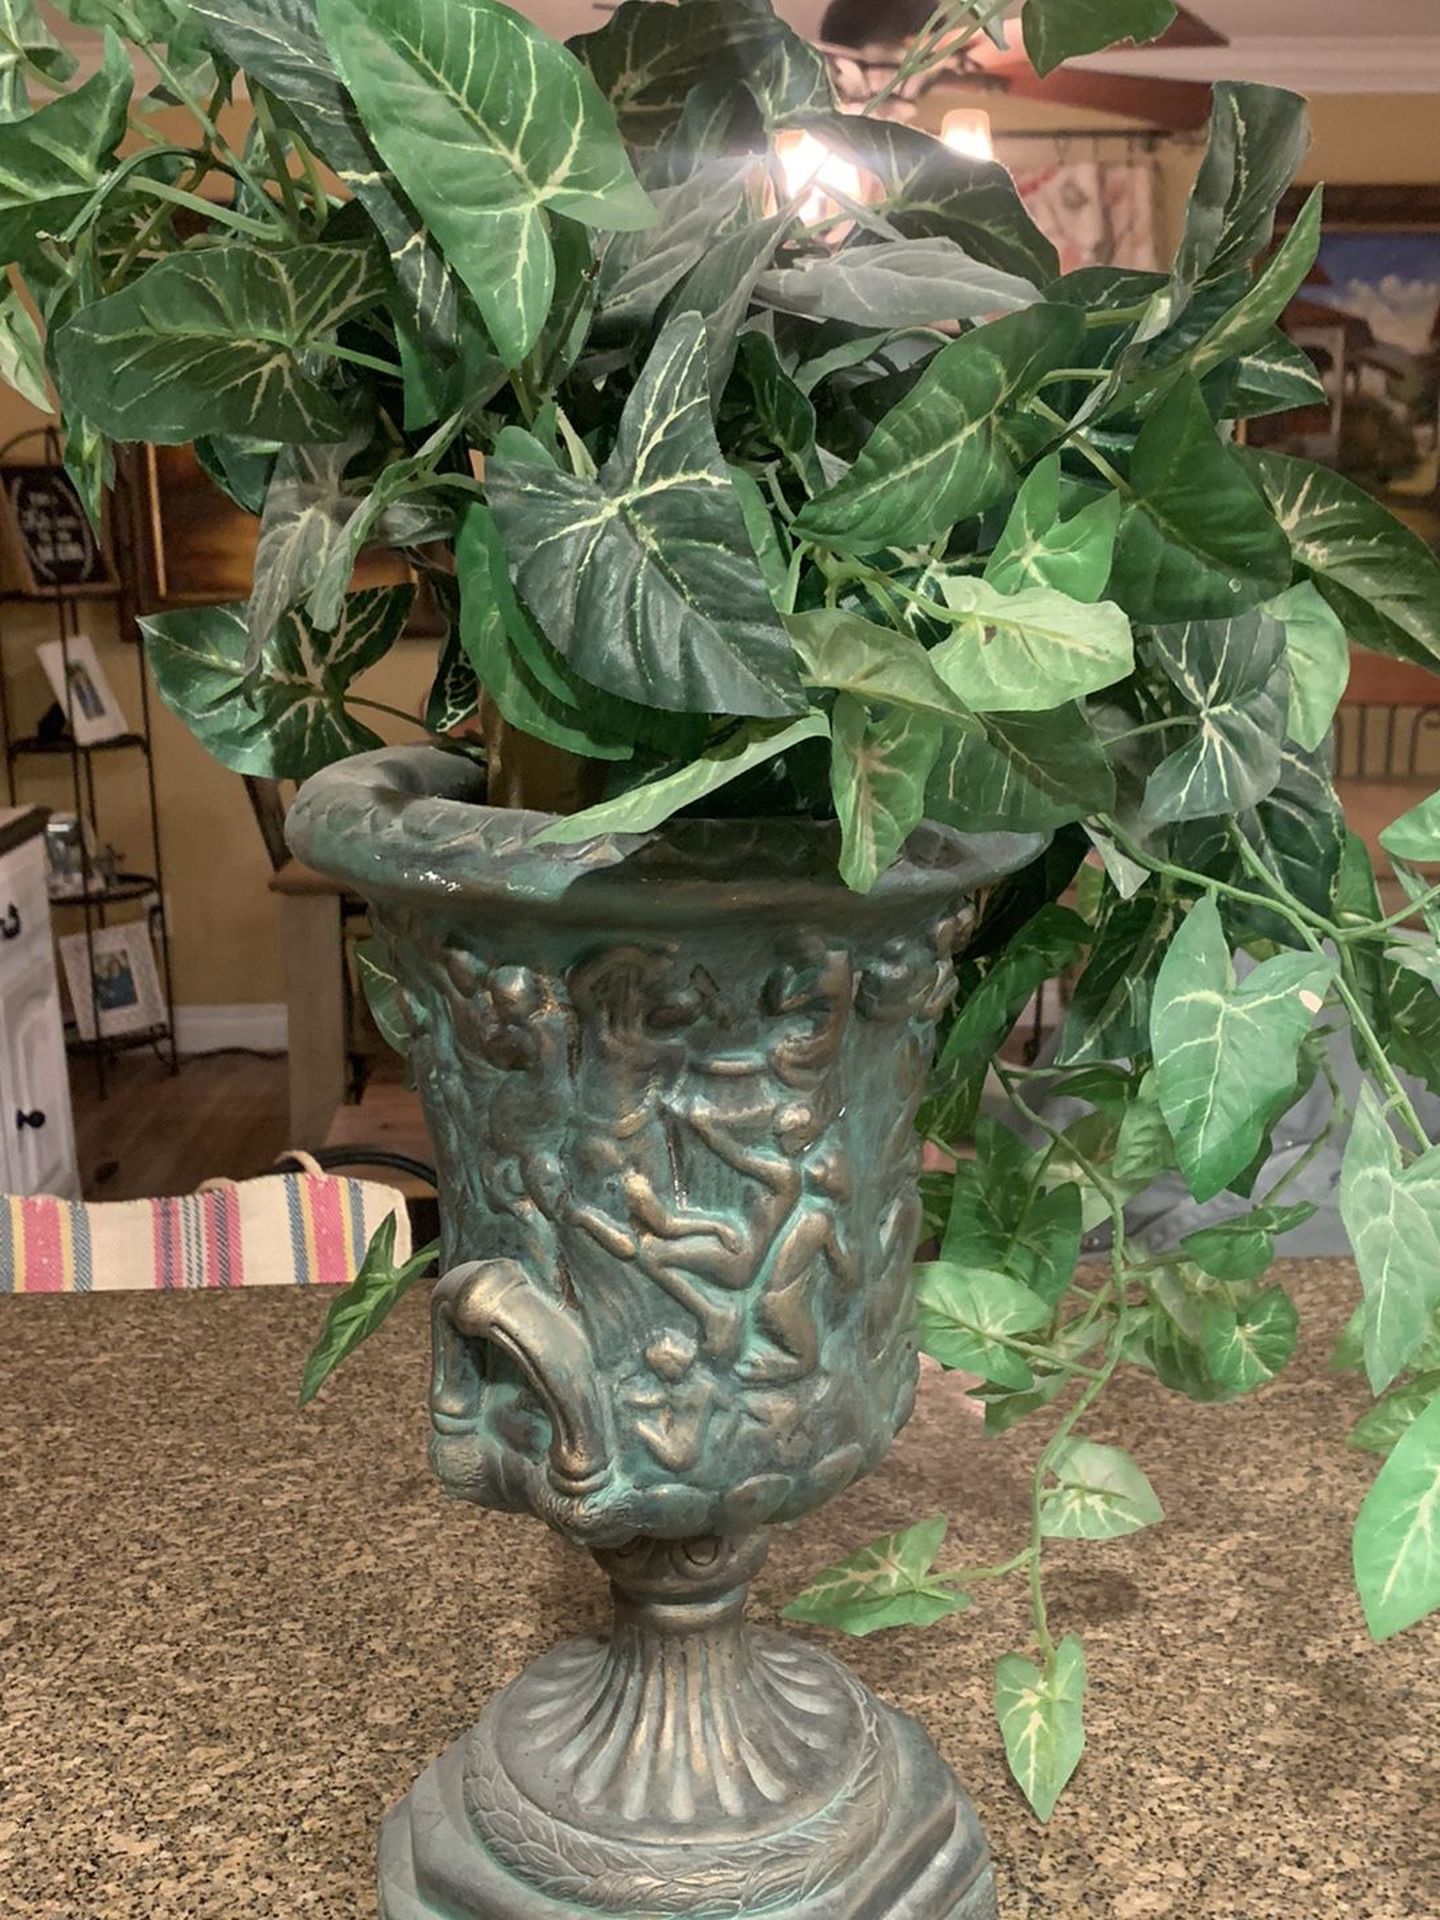 Very heavy vase and fake plant